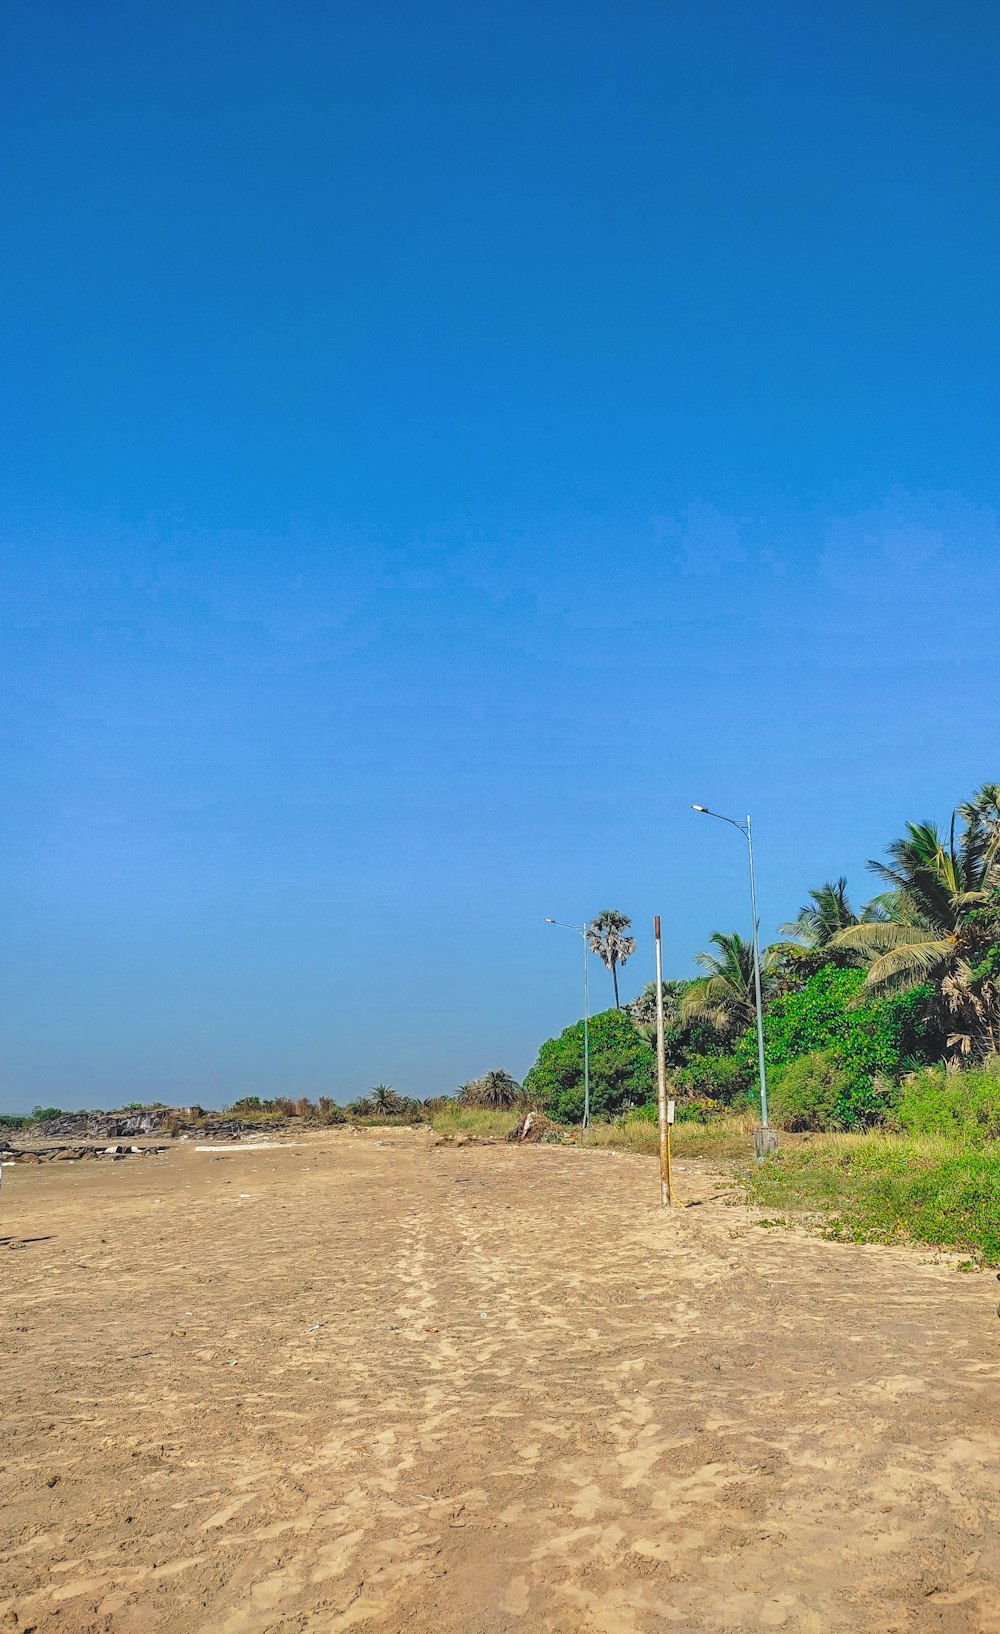 a sandy beach with palm trees and a blue sky